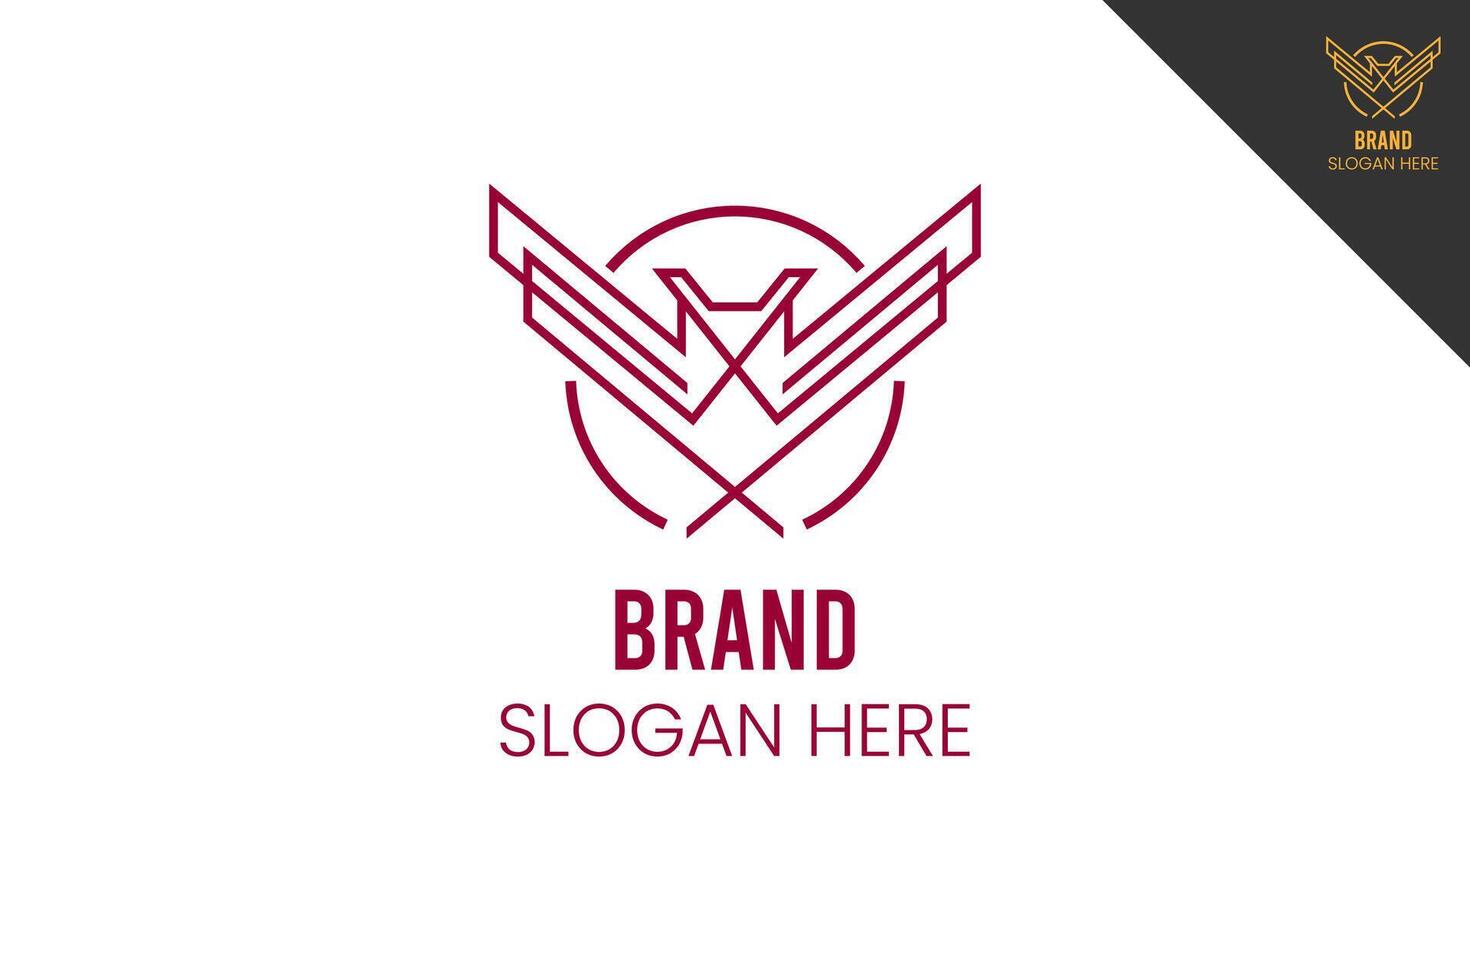 Bird logo template design. Modern and minimal logotype. Animal logo design illustration. Fit for brand, company, merch, icon, label, business. eps 10. vector